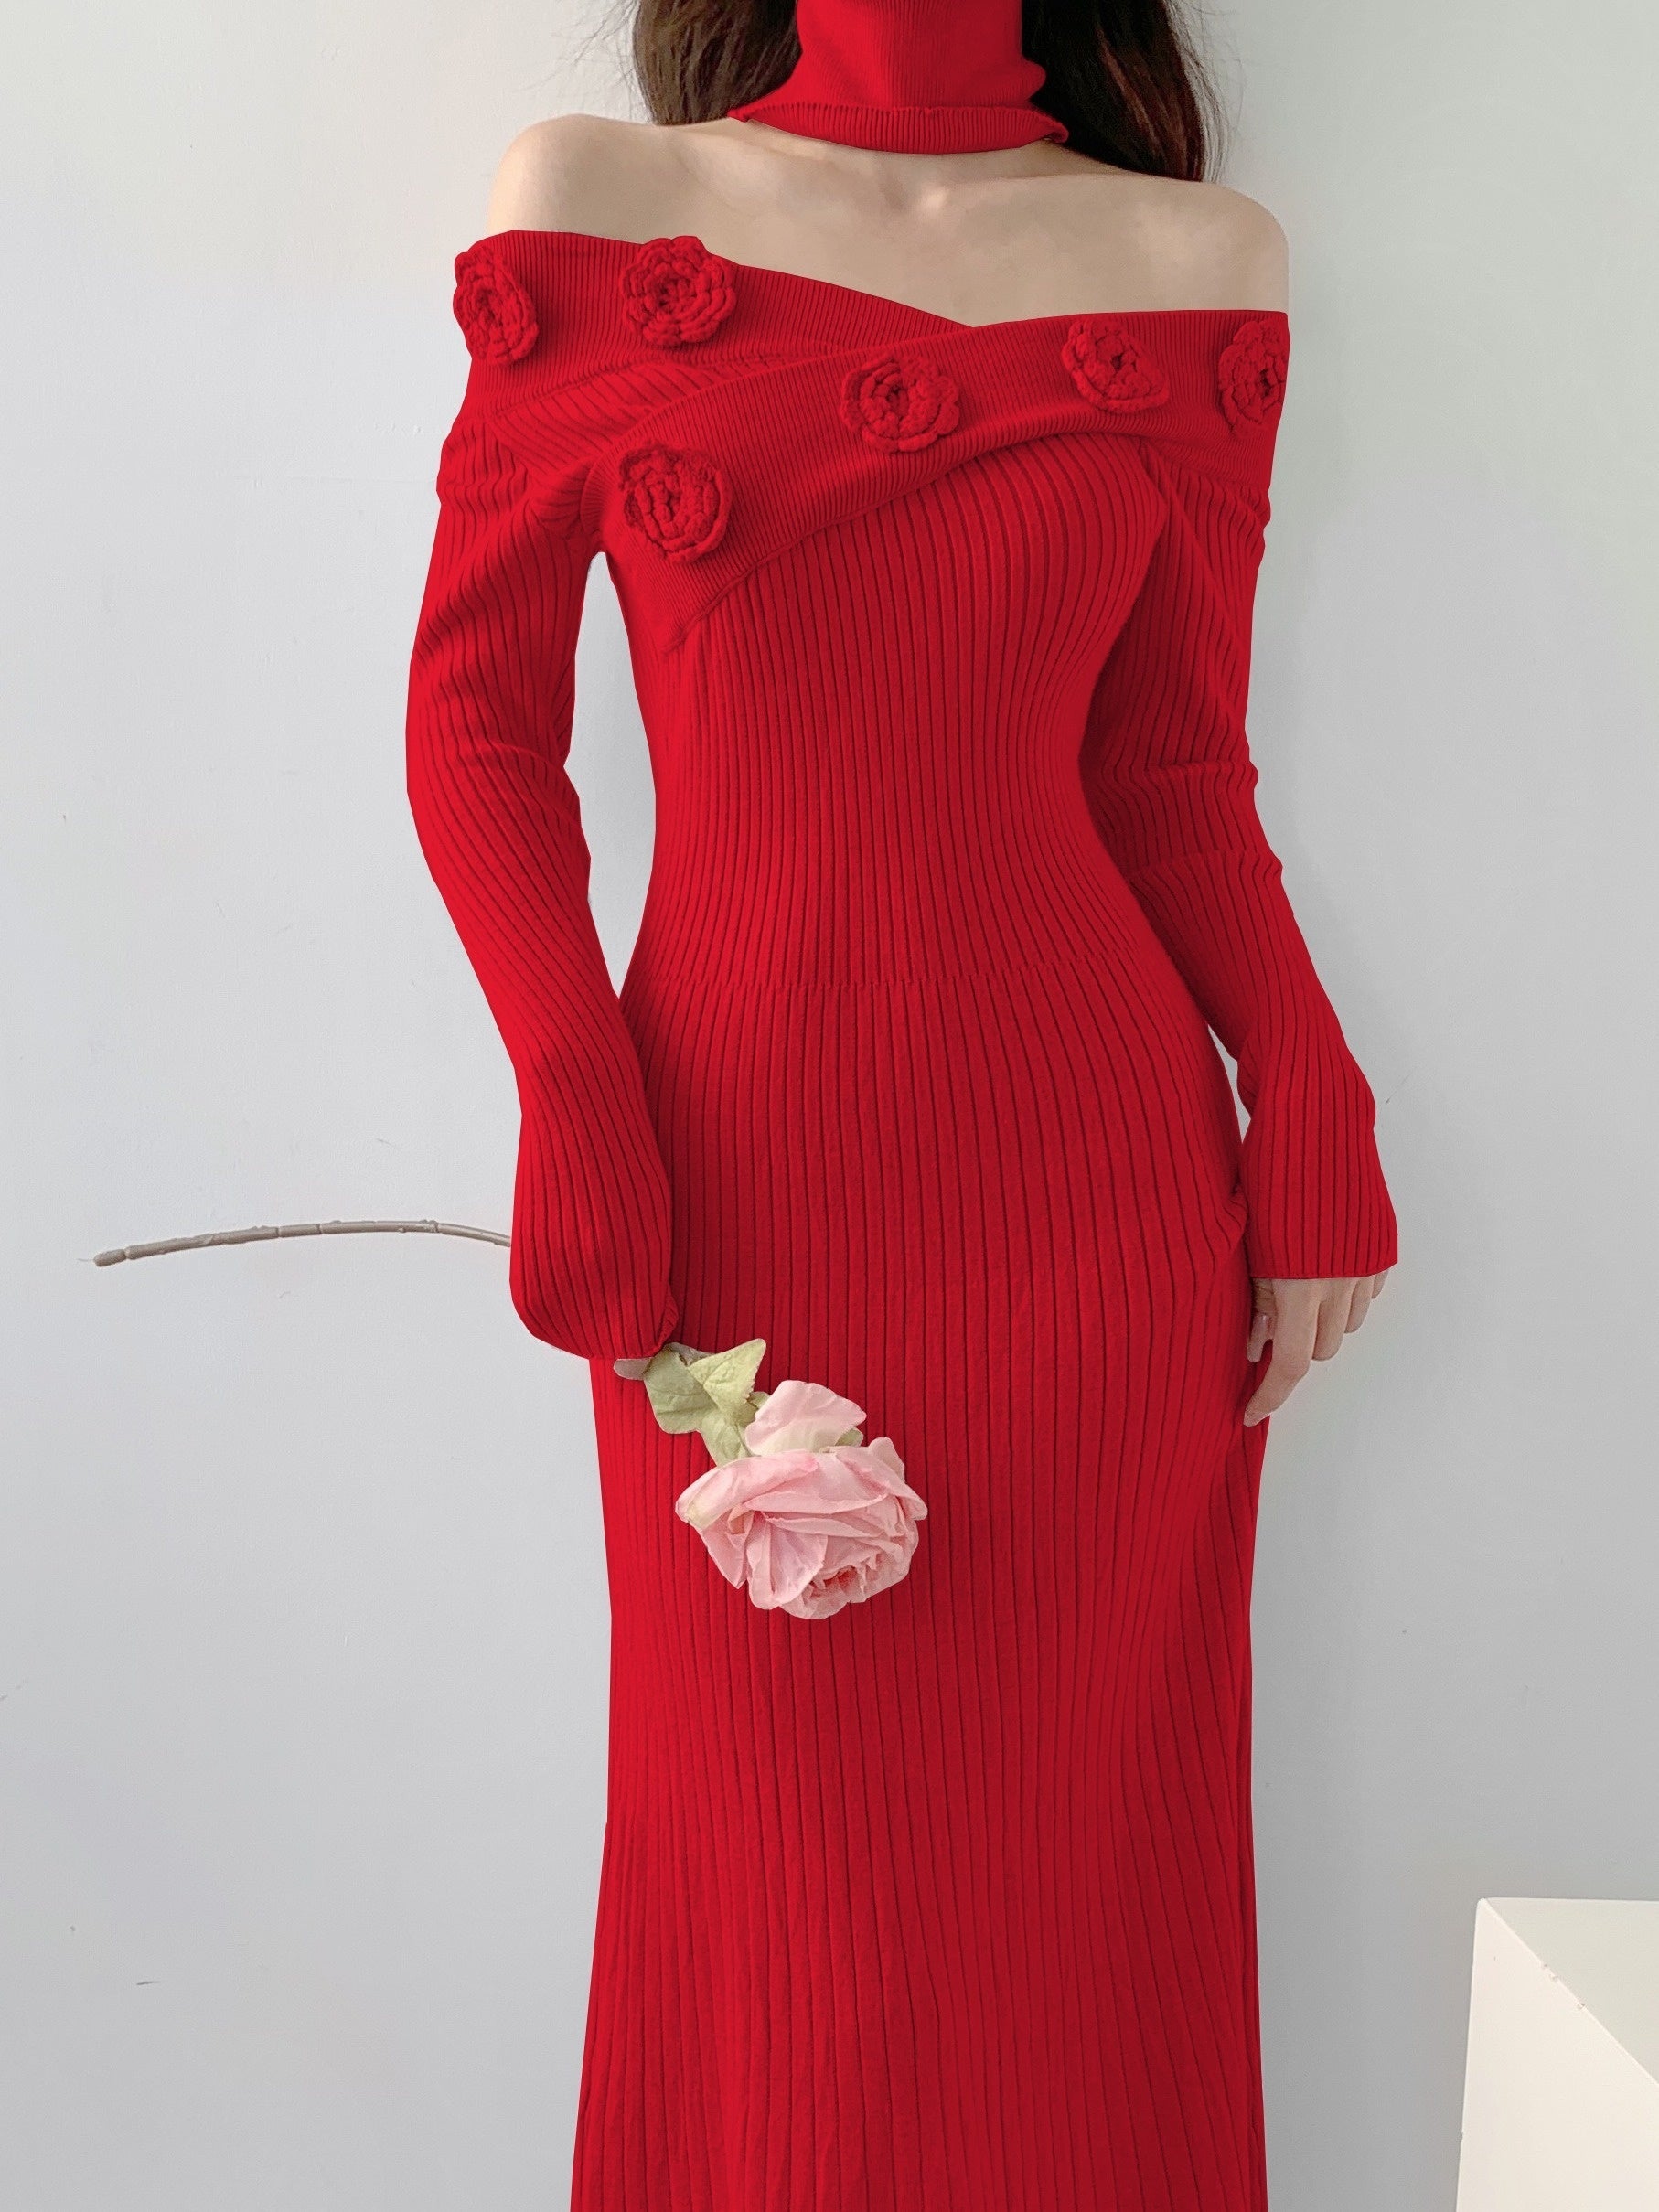 Vzyzv Ribbed Floral Decor Dress, Elegant Long Sleeve Bodycon Midi Dress, Women's Clothing